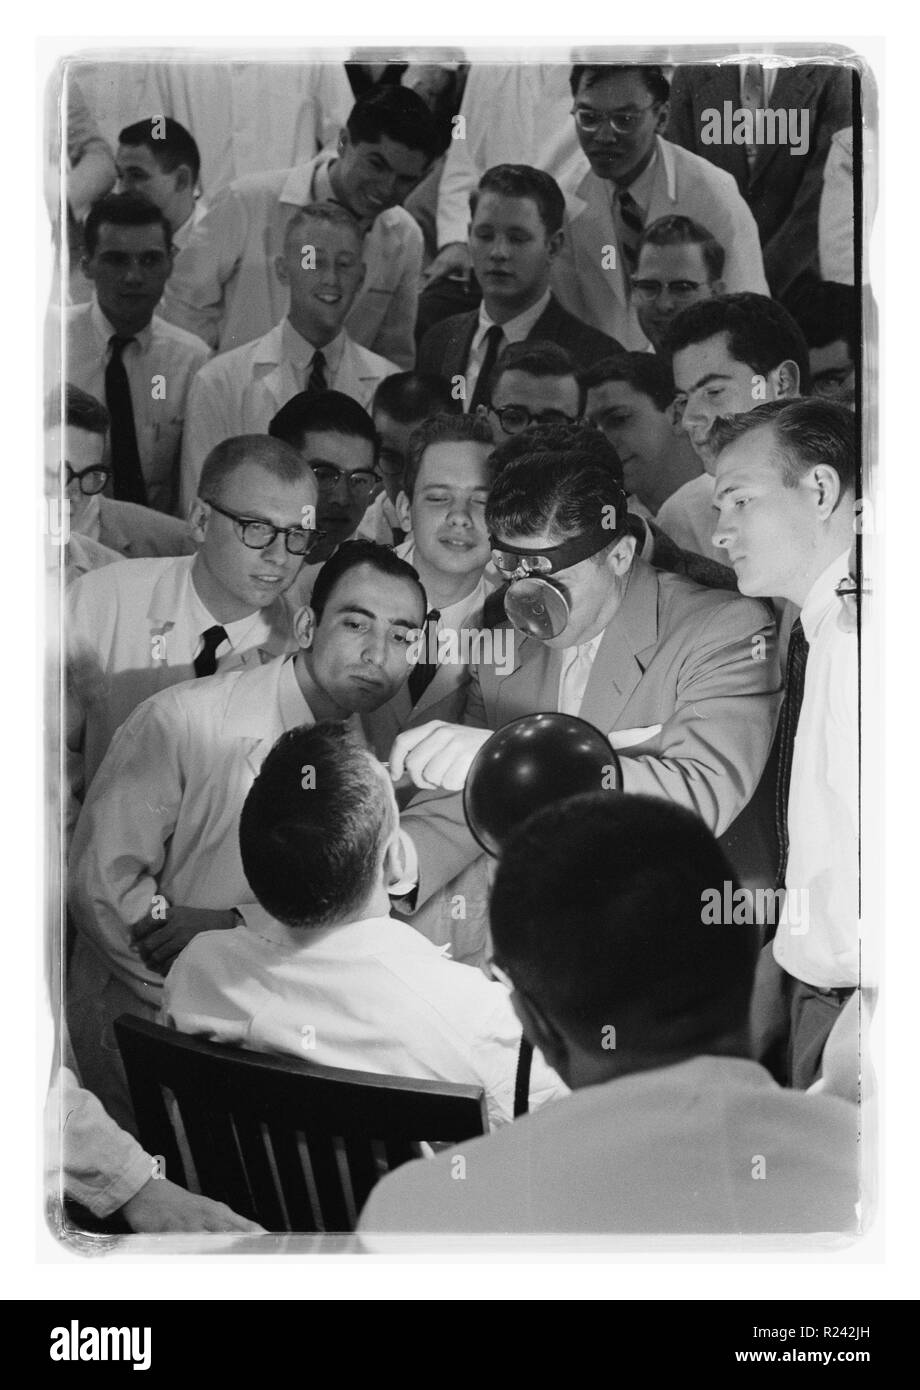 George Washington University Medical School, Washington, D.C. Students in class 1958 Stock Photo